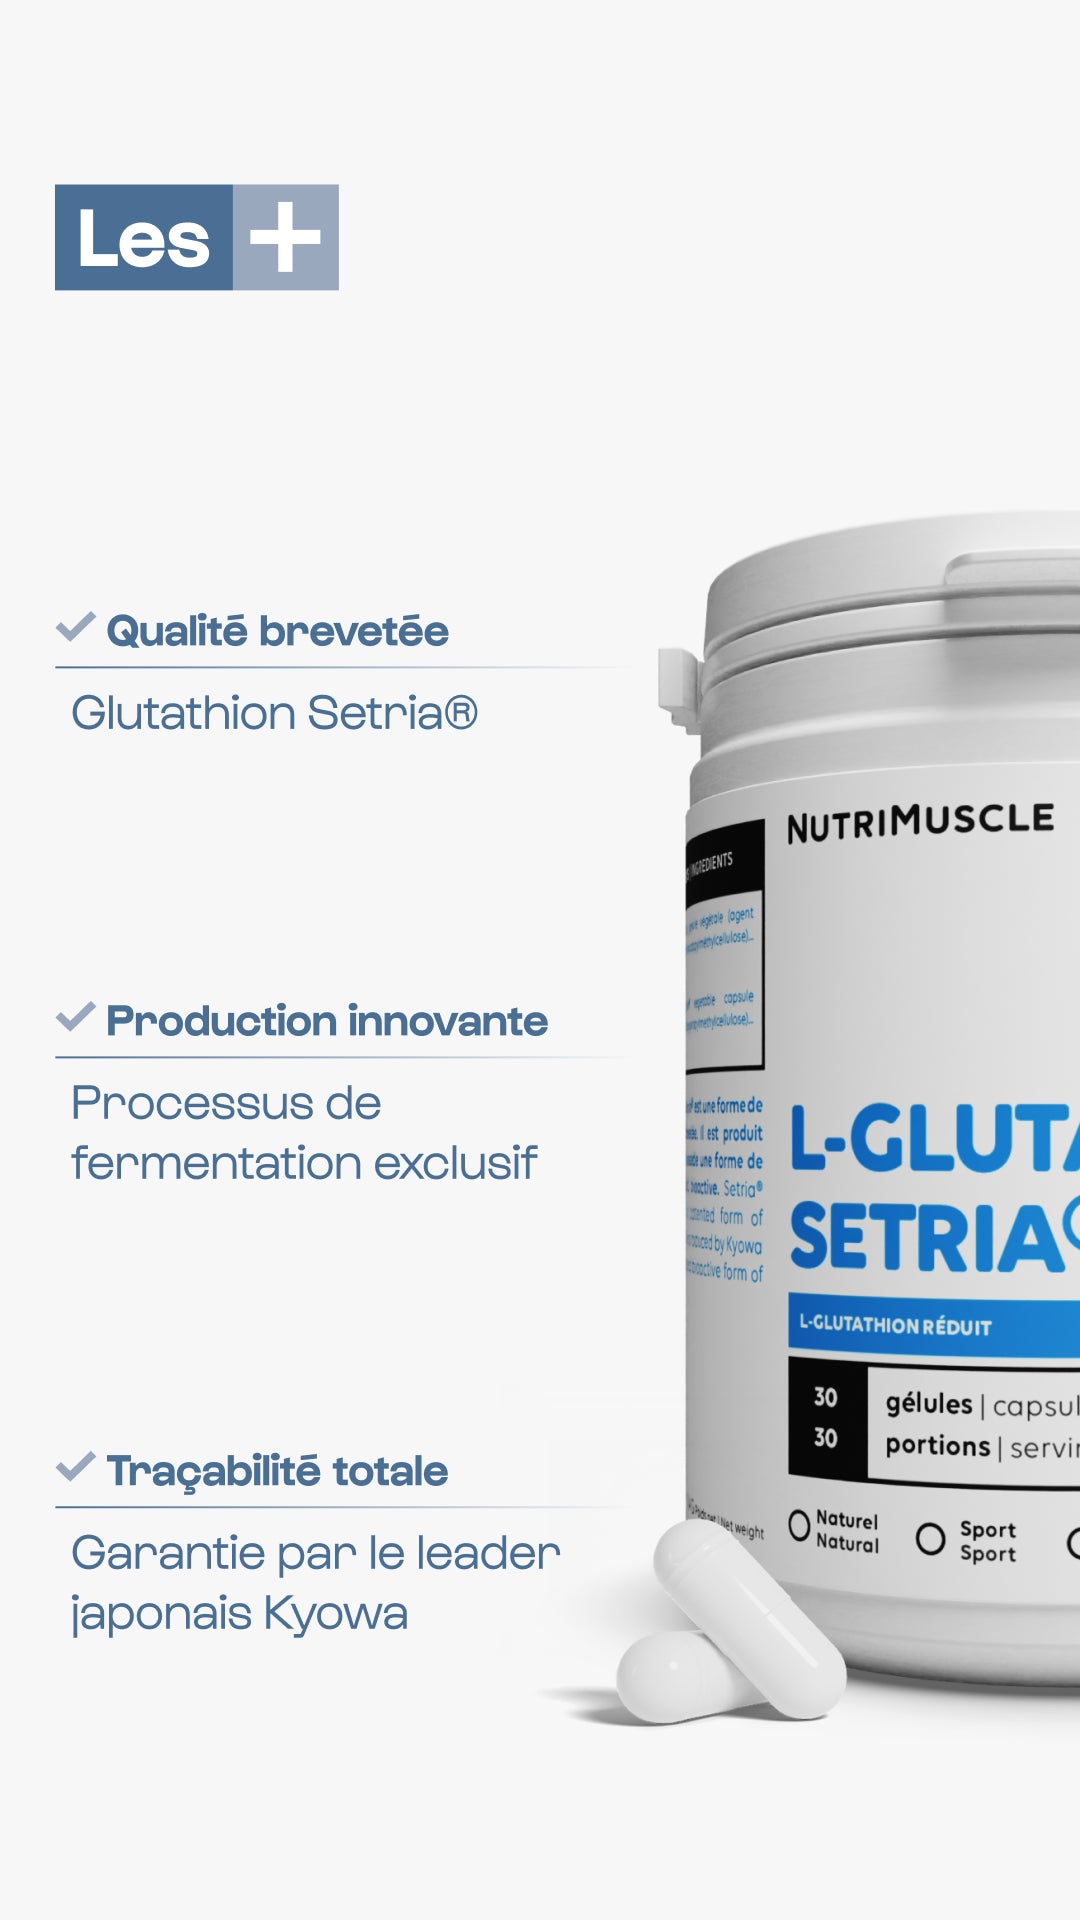 Glutathion Setria®